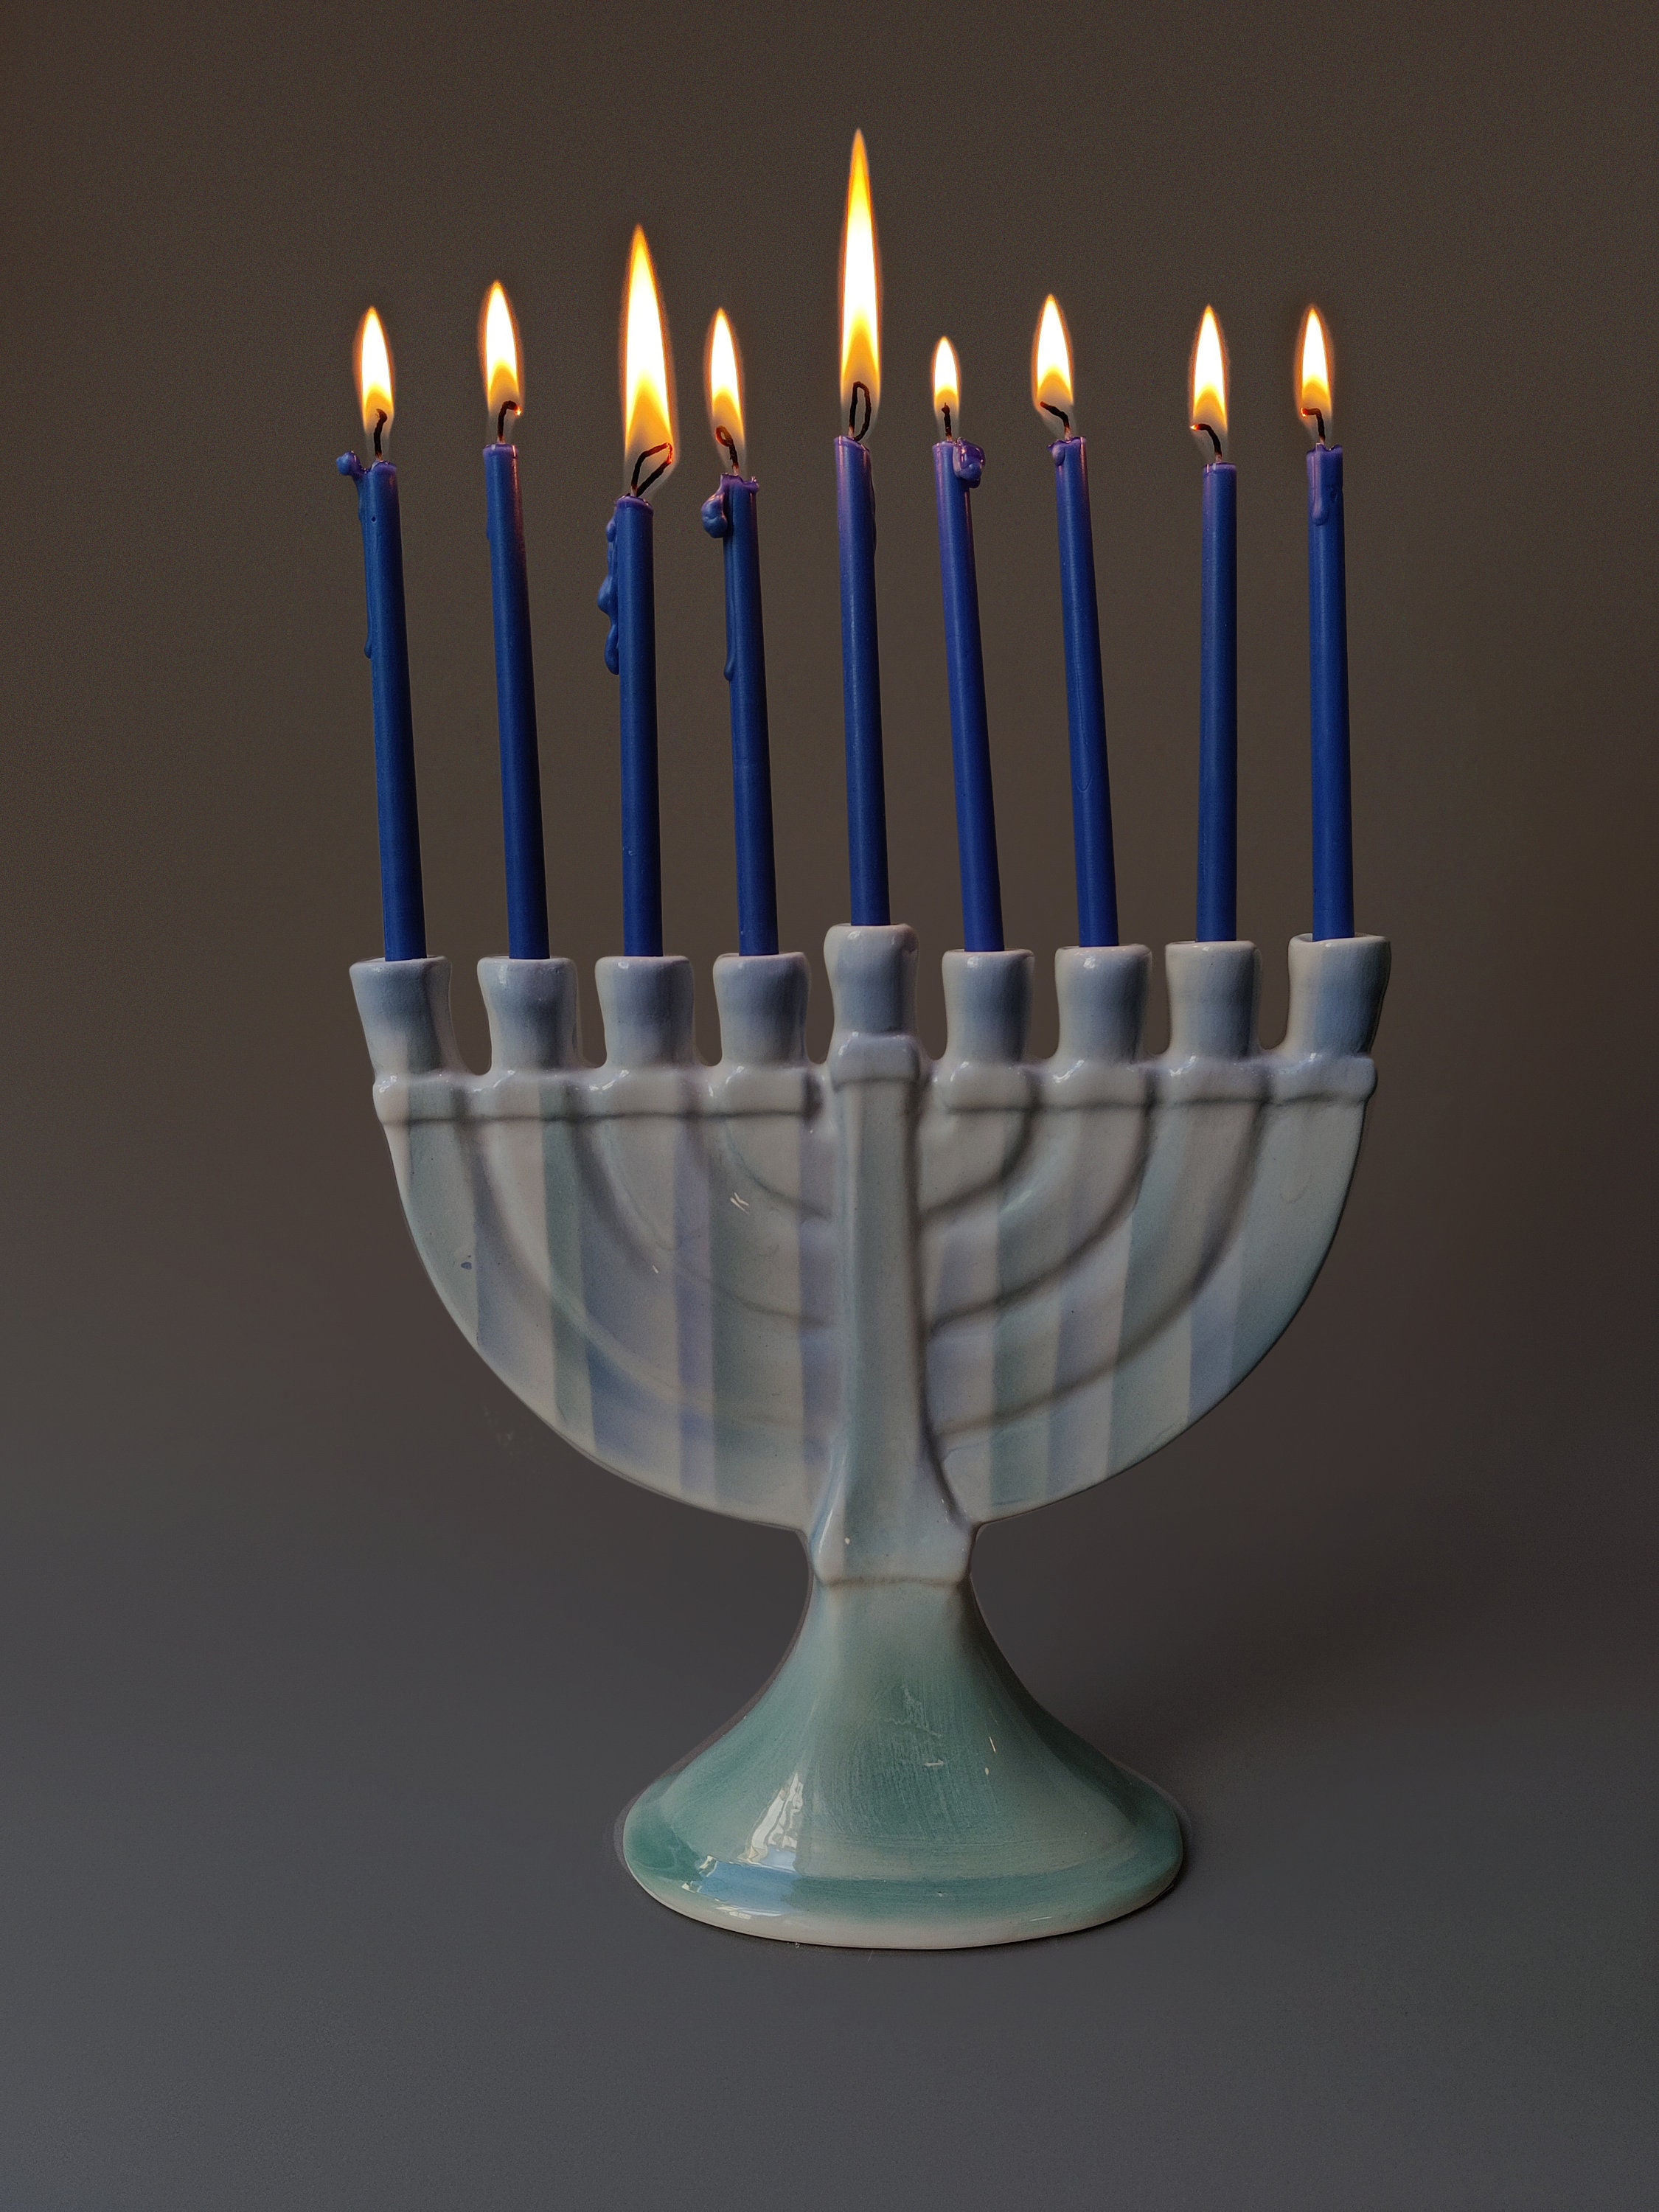 Personalized Hanukkah Menorah Design Pot Holders – The Photo Gift